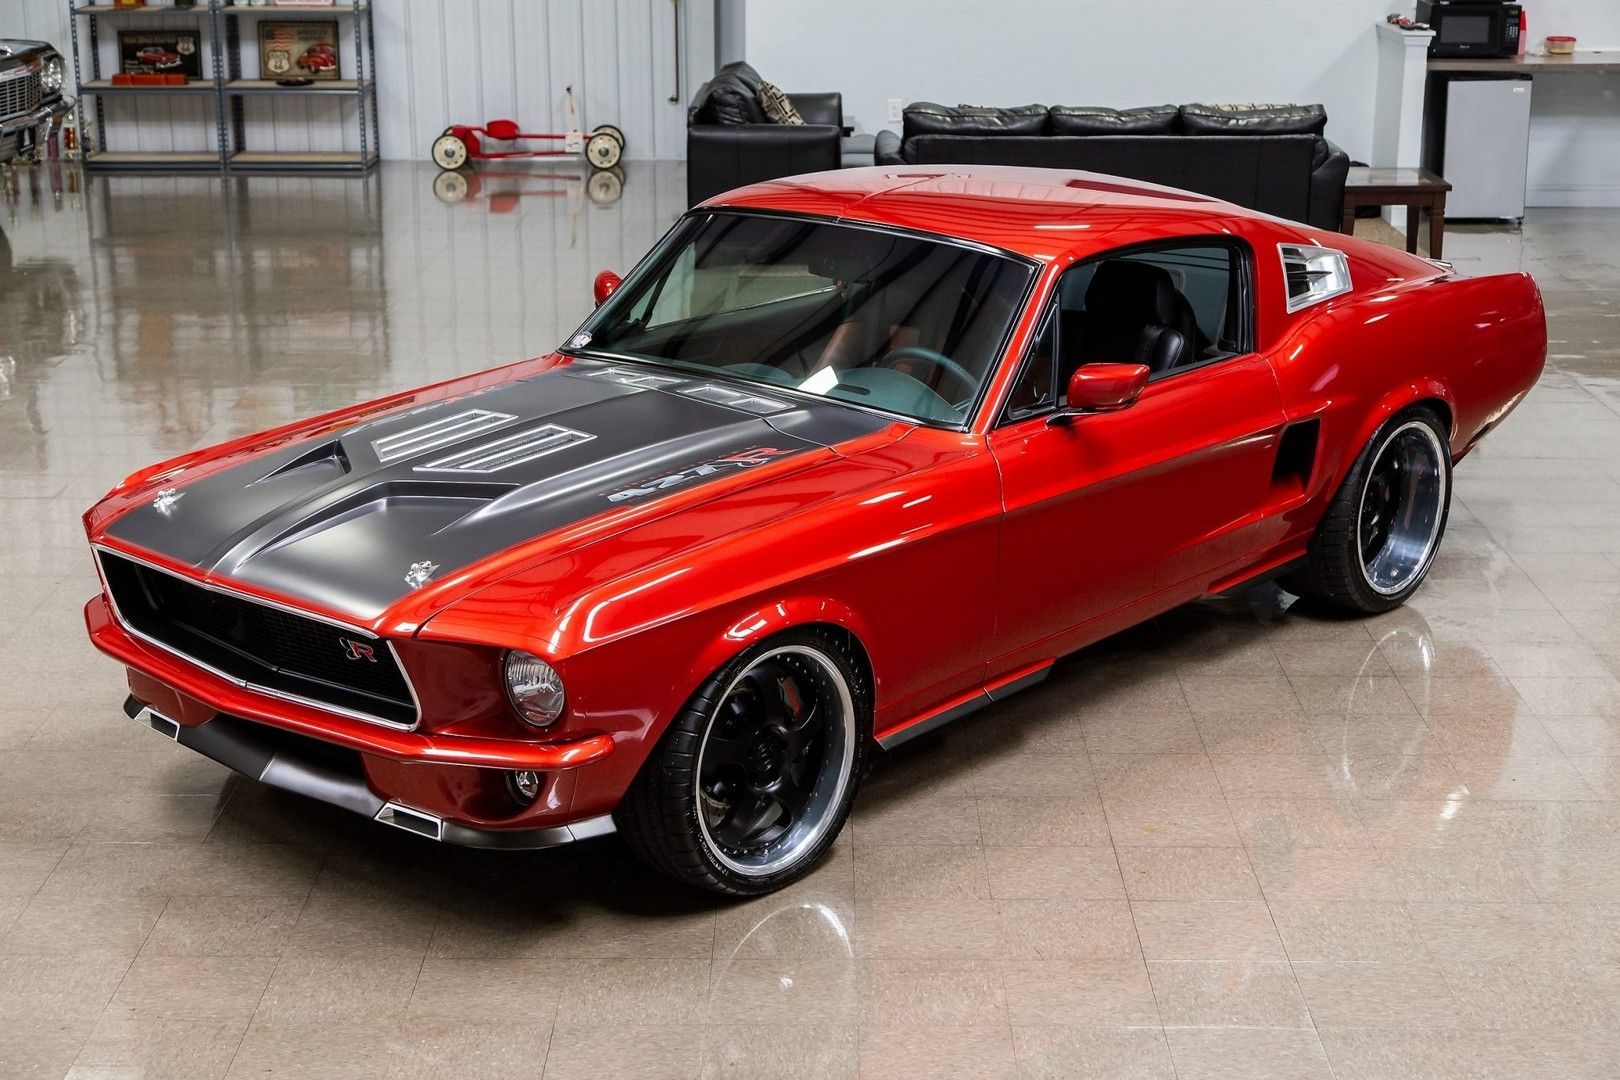 <img src="1967-ford-mustang-3.jpg" alt="Ringbrothers custom 1967 Ford Mustang">